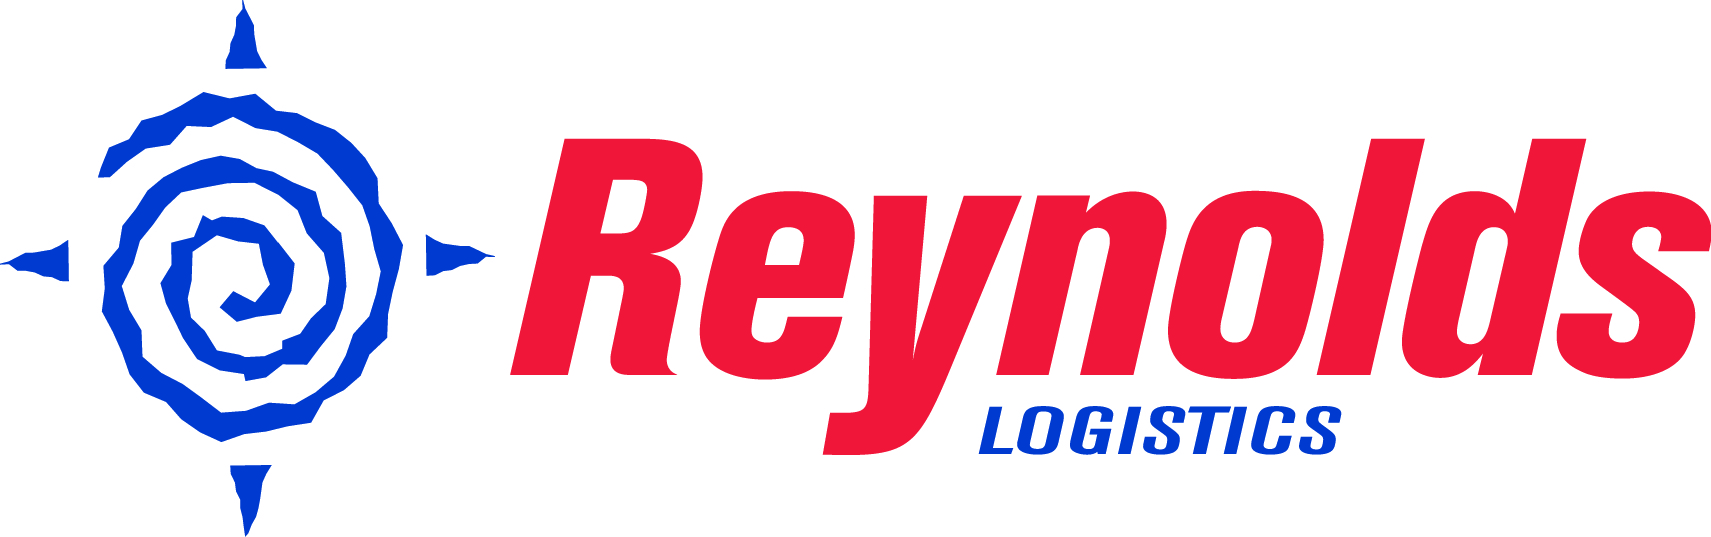 Organisation Logo - Reynolds Logistics Ltd